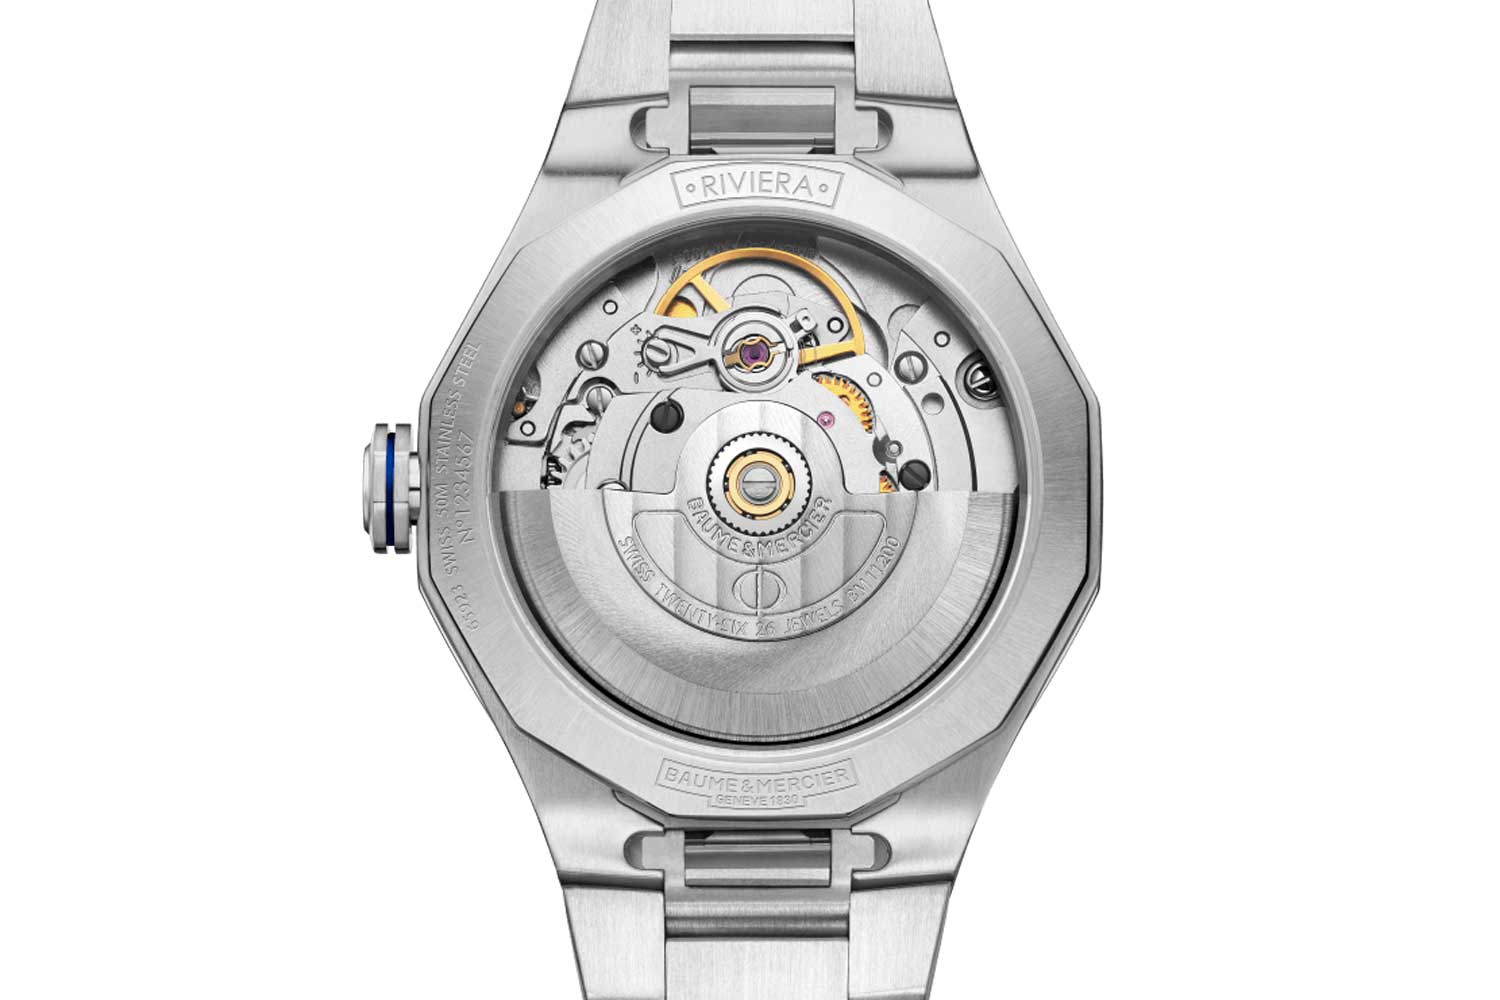 Ref. M0A10677 “Coastline” features diamonds and integrated steel bracelet